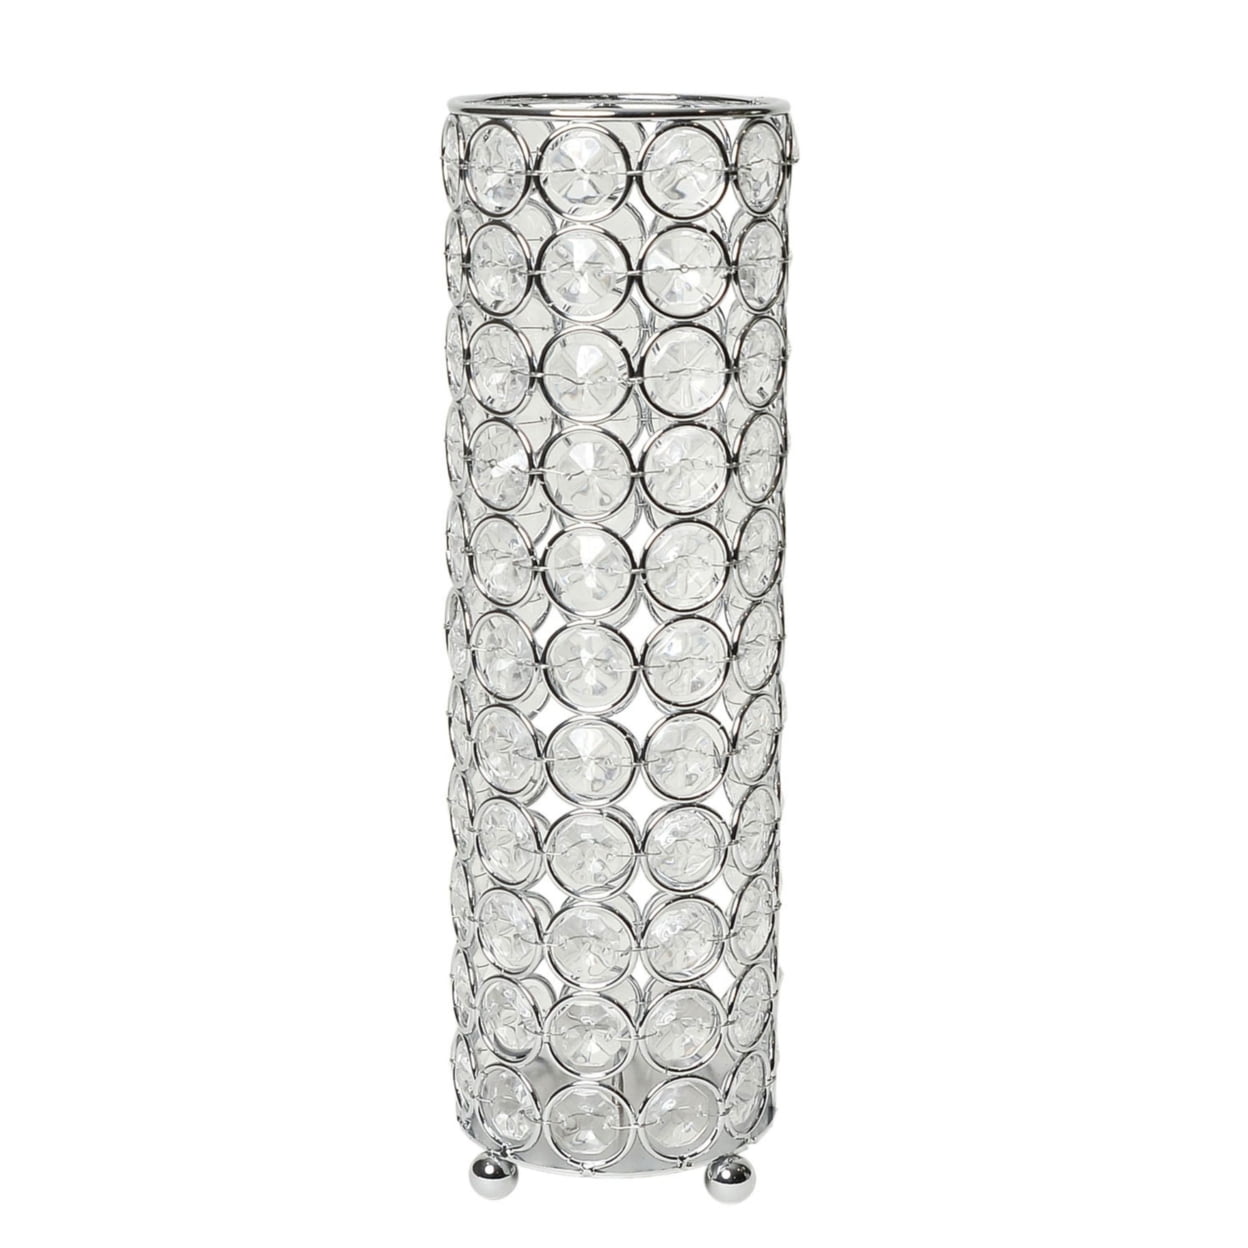 Elegant Designs Hg1011-chr 10.25 In. Elipse Crystal Decorative Flower Vase, Candle Holder - Wedding Centerpiece - Chrome